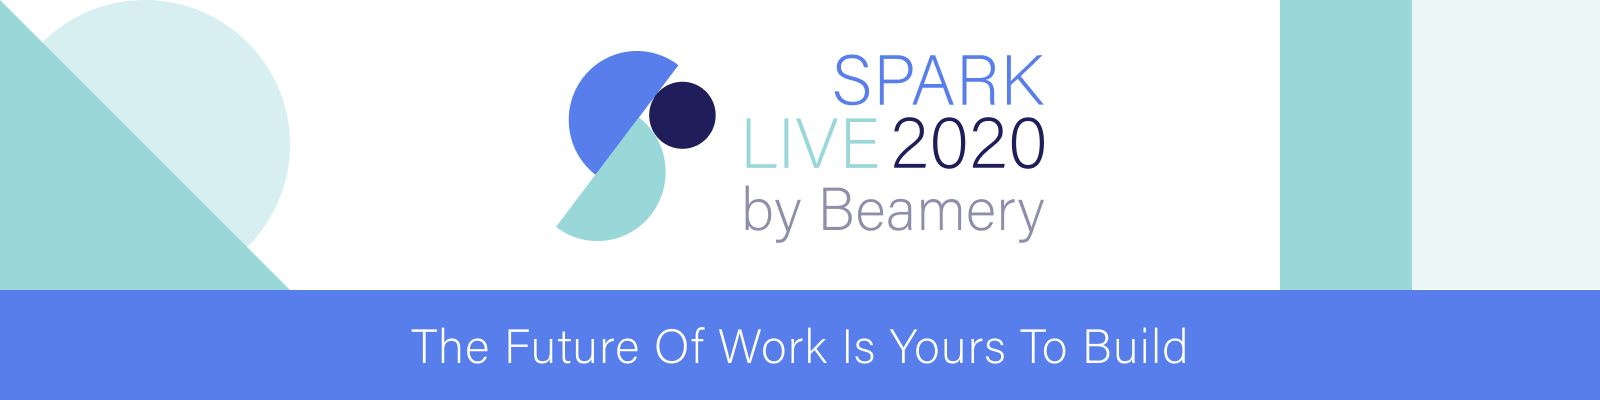 Spark Live 2020